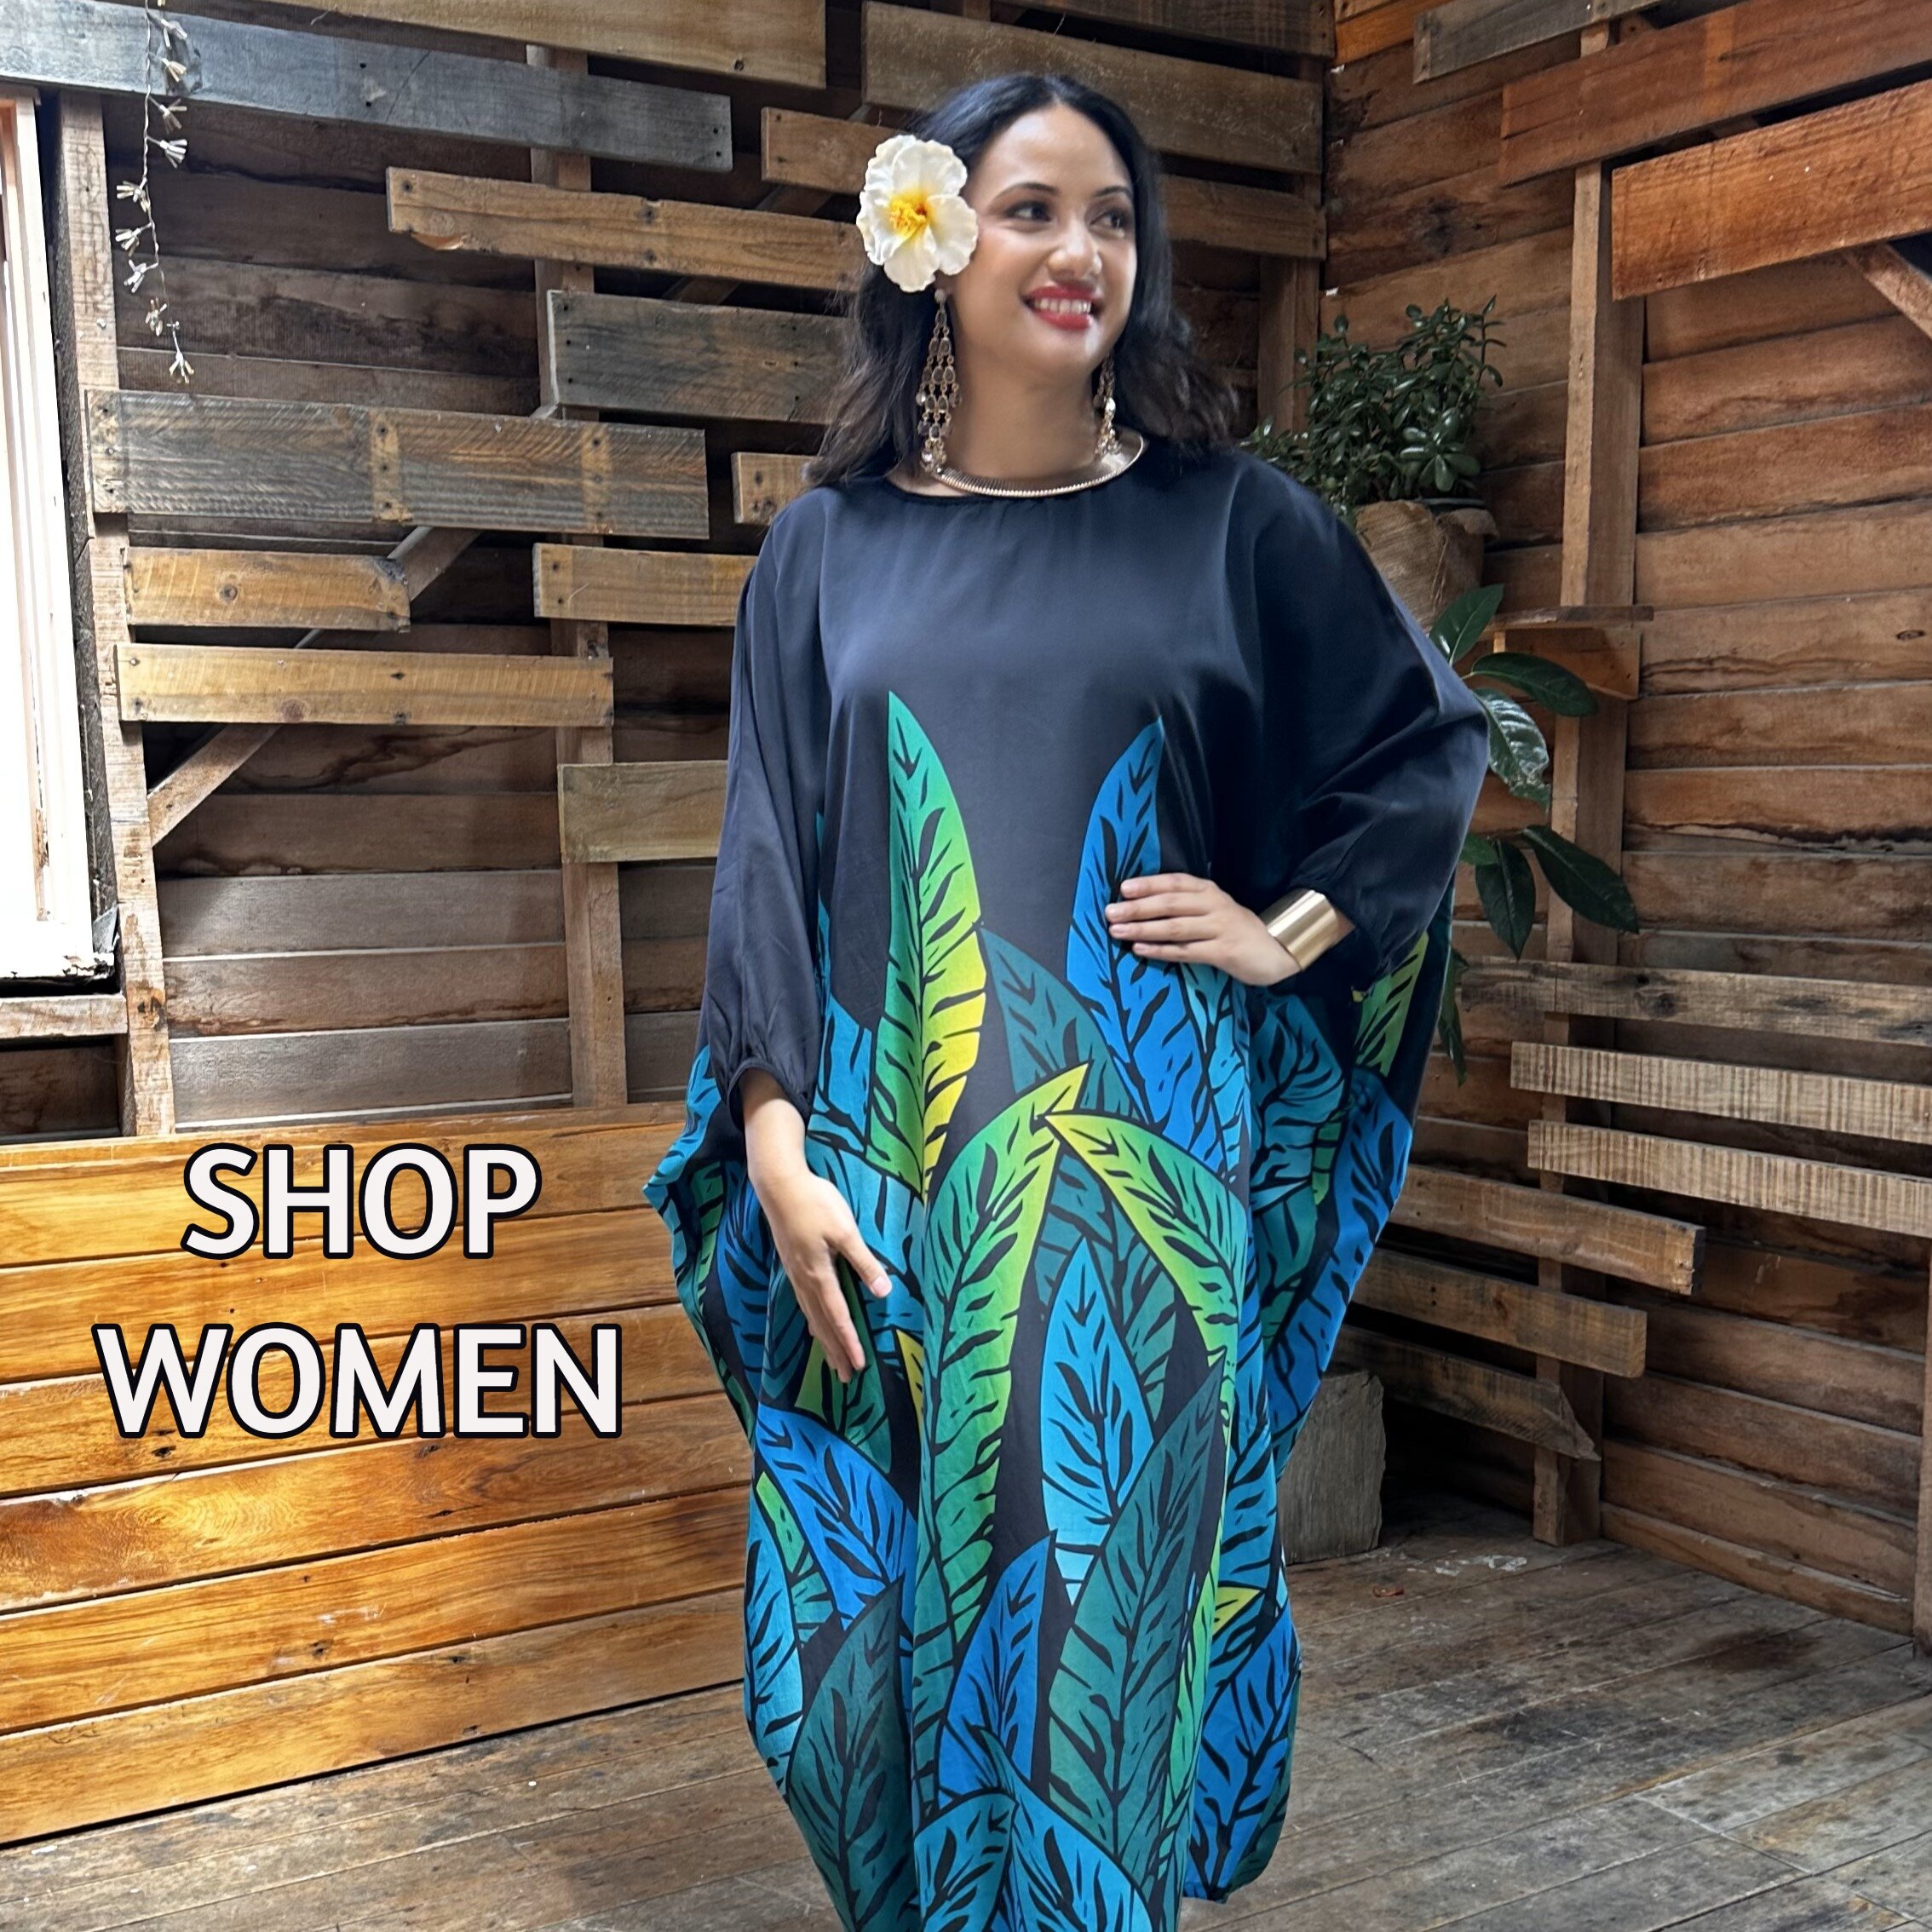 Samoan Dresses ☀ Clothing | Pacific ...